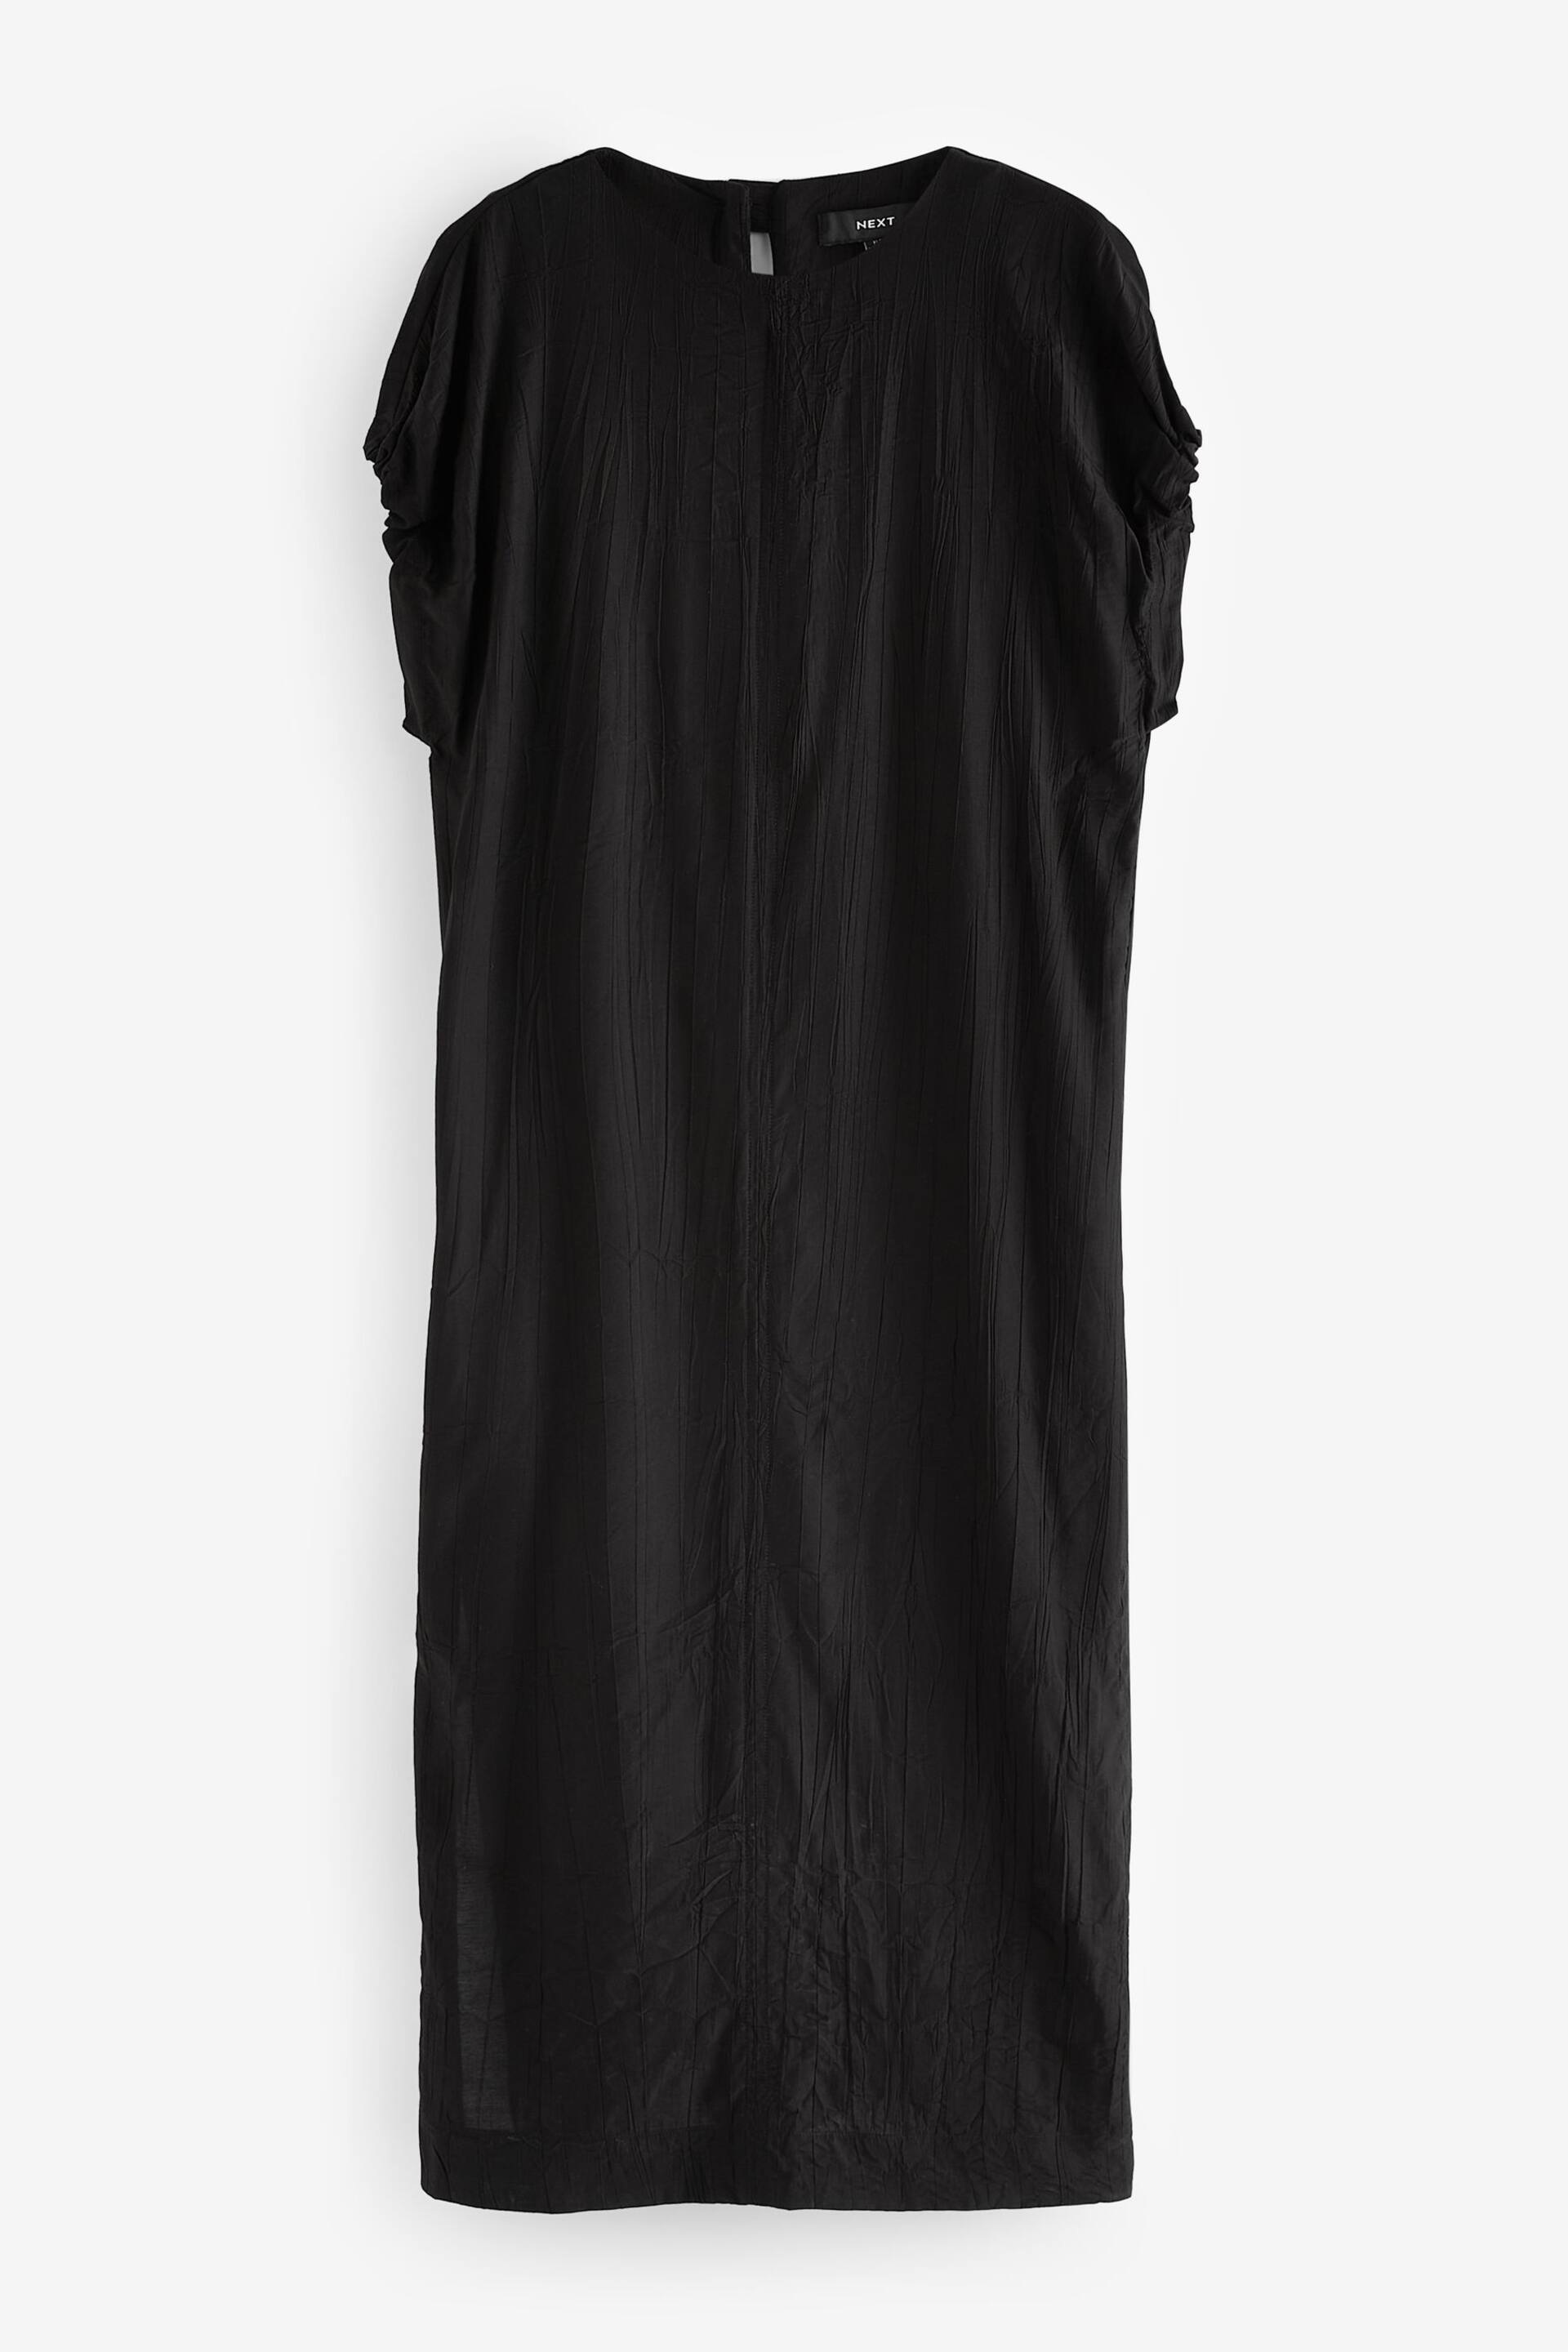 Black Short Sleeve Column T-shirt Midi Dress - Image 5 of 6